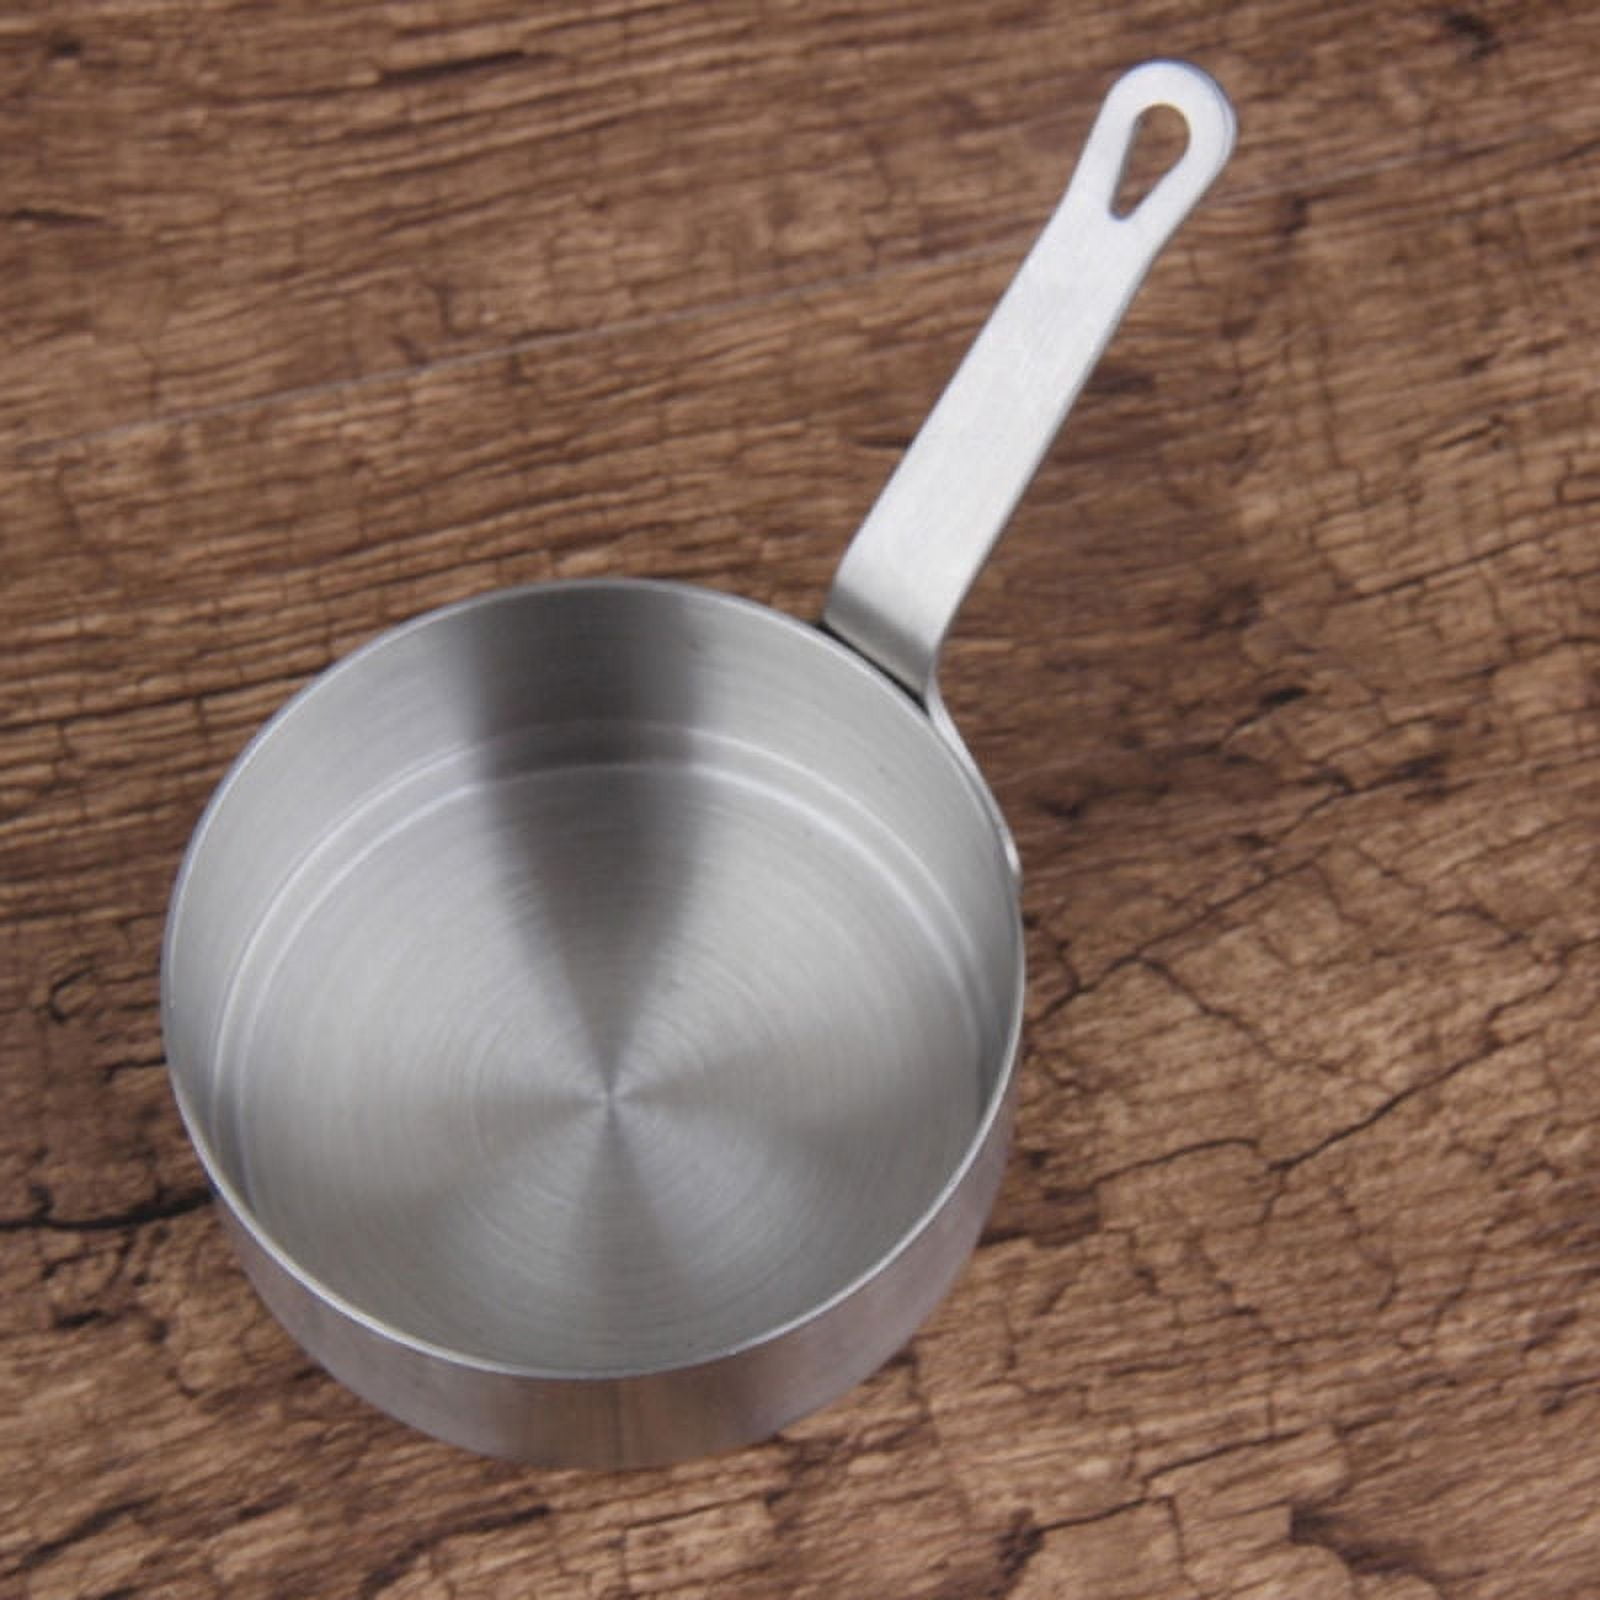 Saucepan Stainless Steel Tpan Small Silver Tea Pan